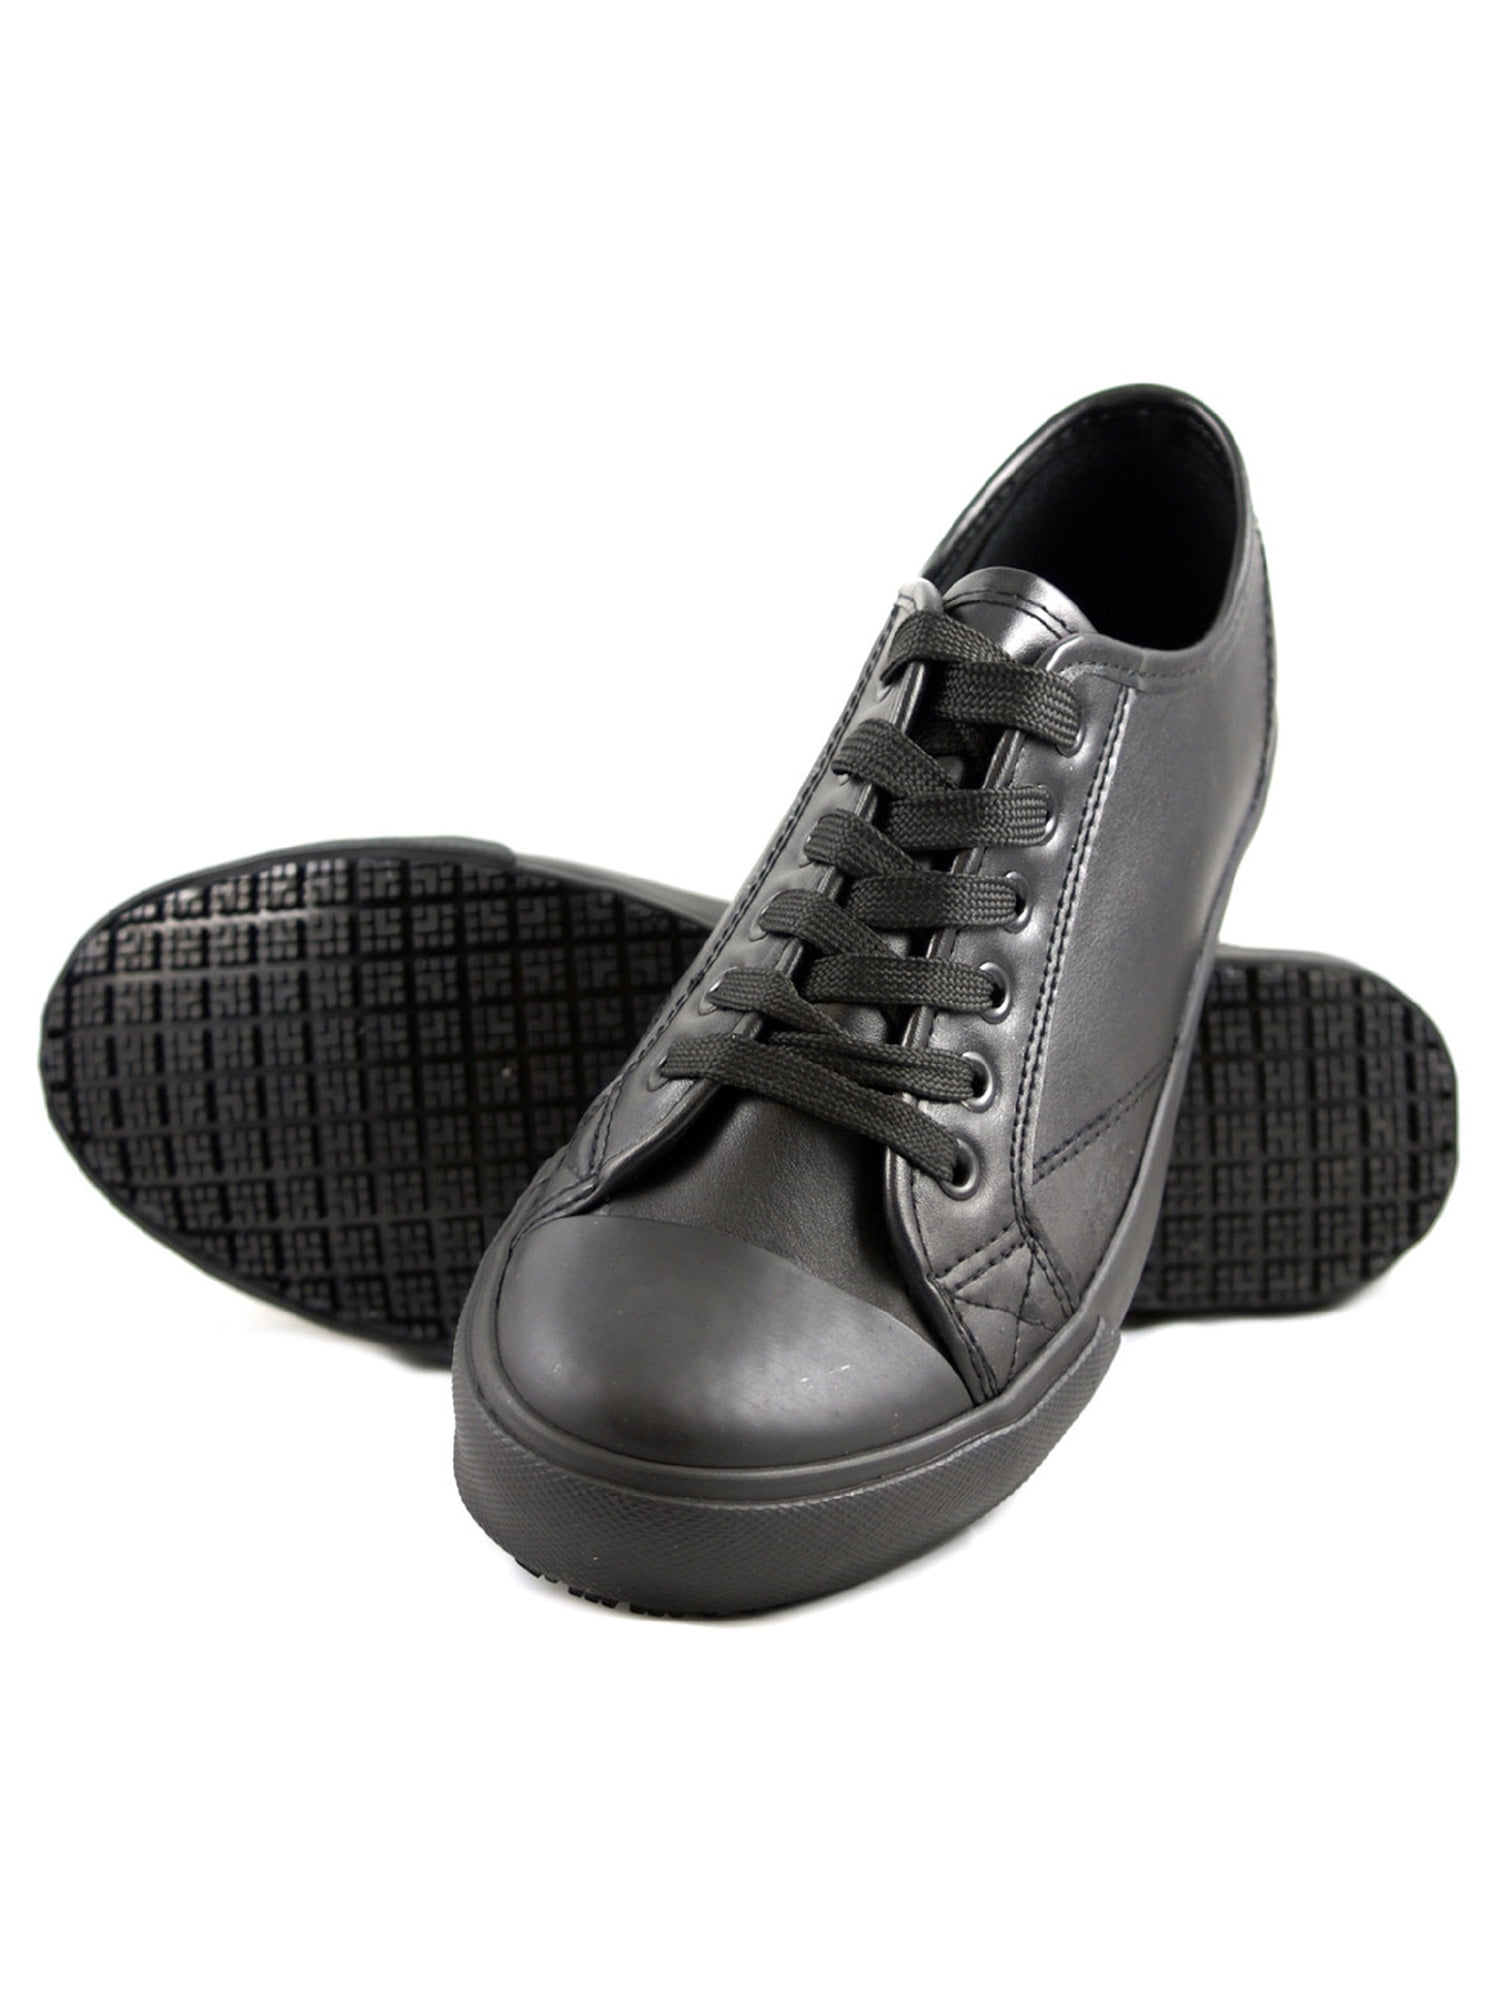 walmart slip resistant shoes womens